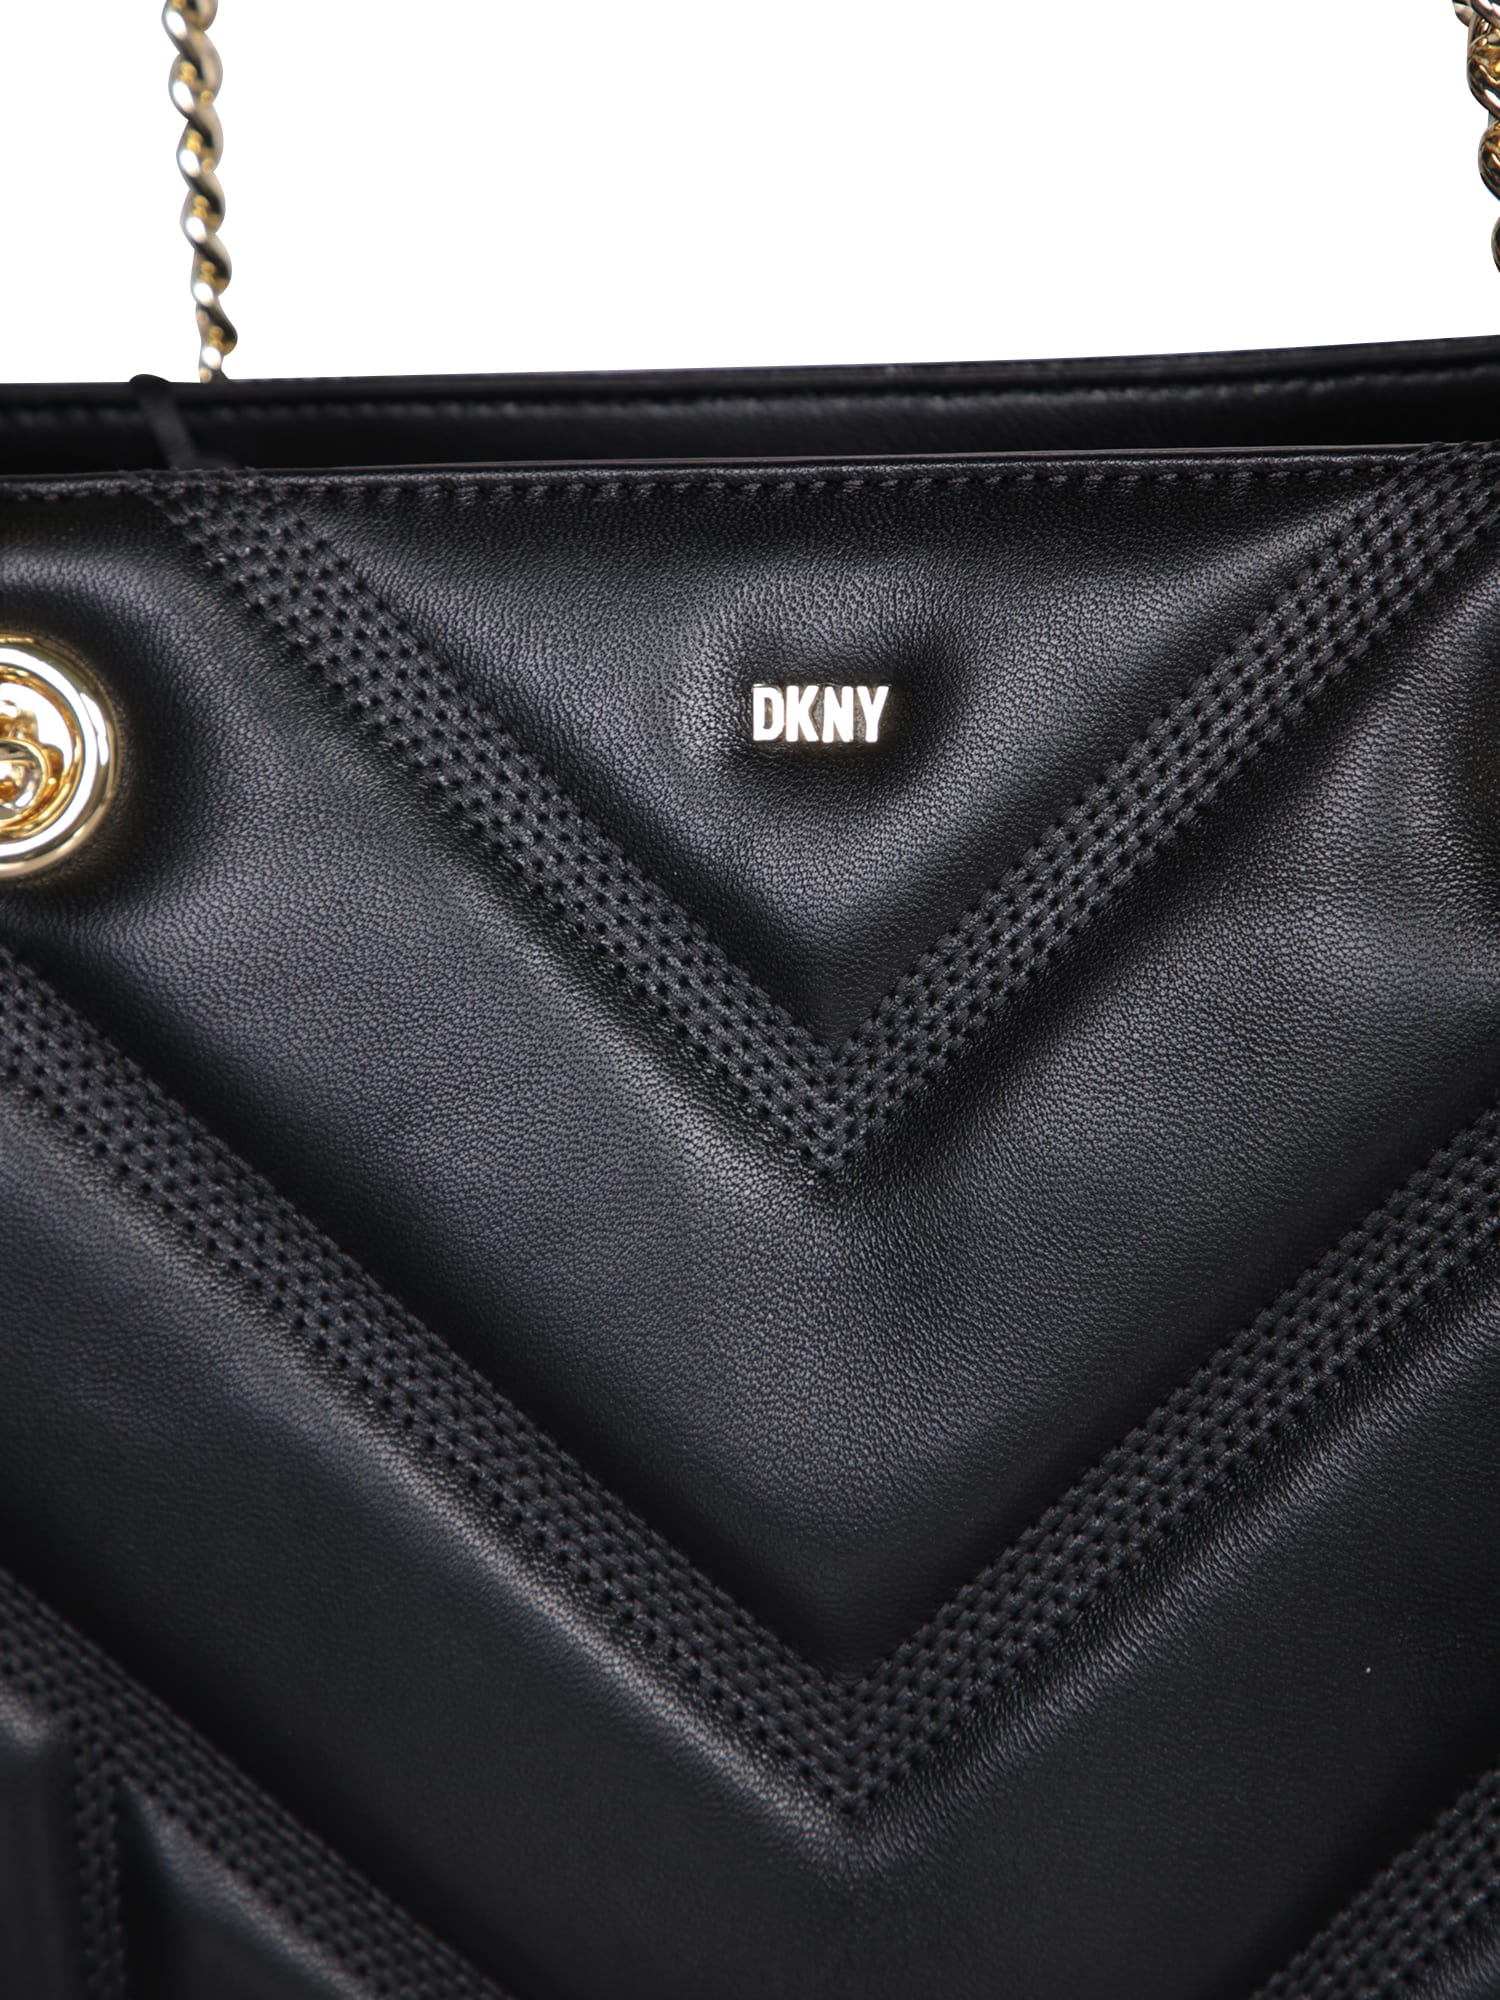 DKNY Vivian Medium Chevron Crossbody Bag